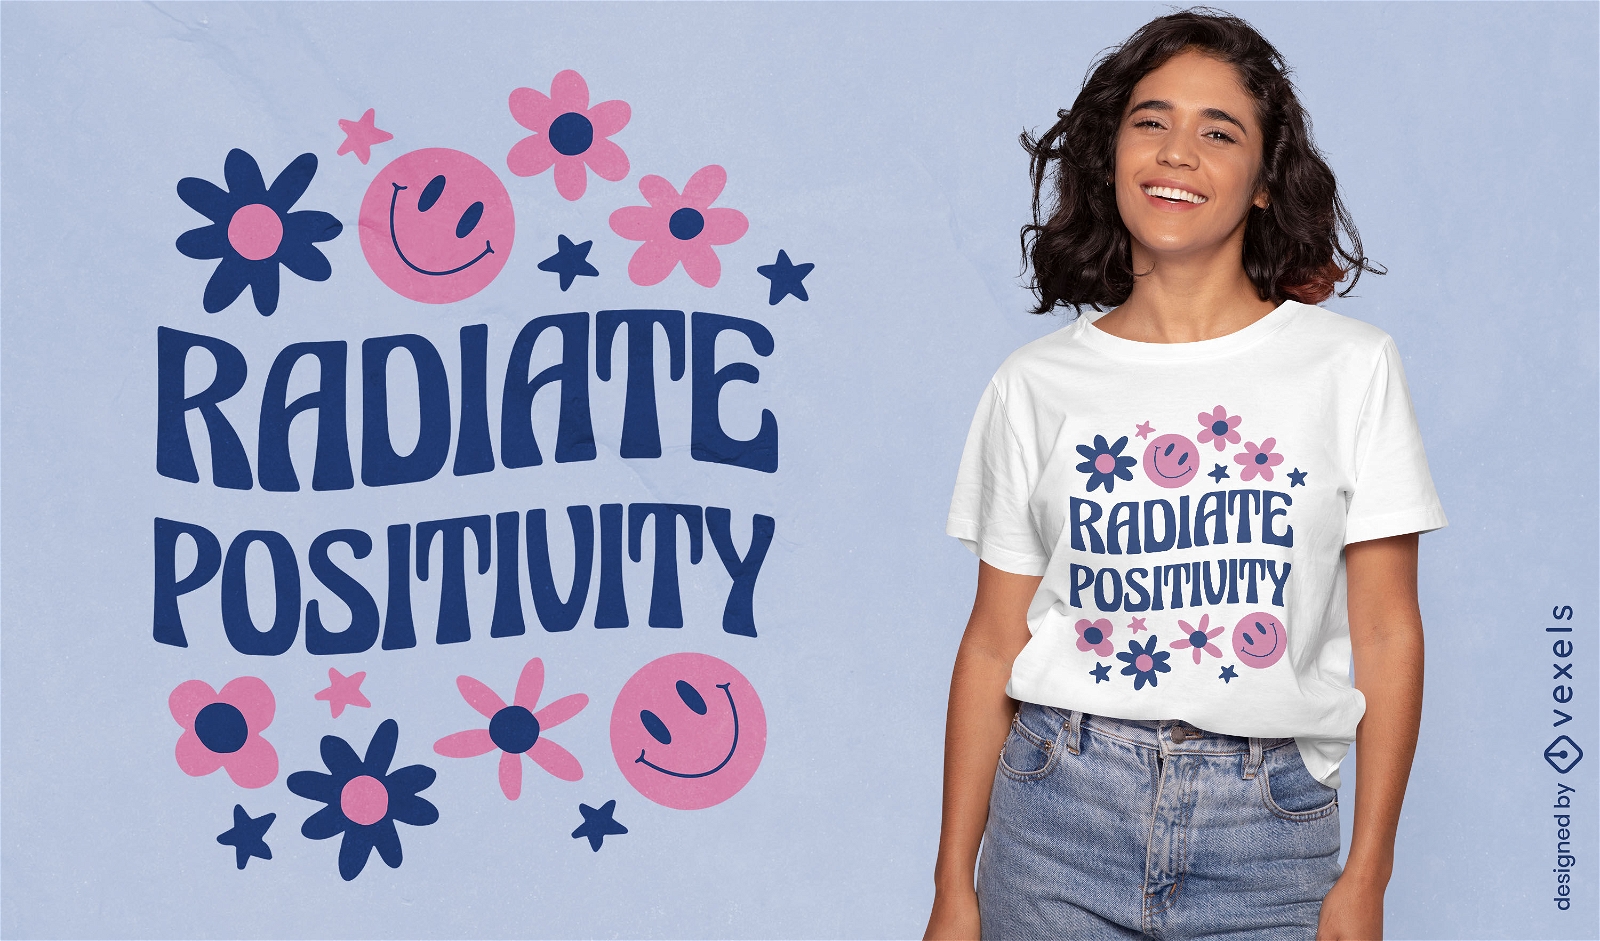 Radiate positivity motivational t-shirt design